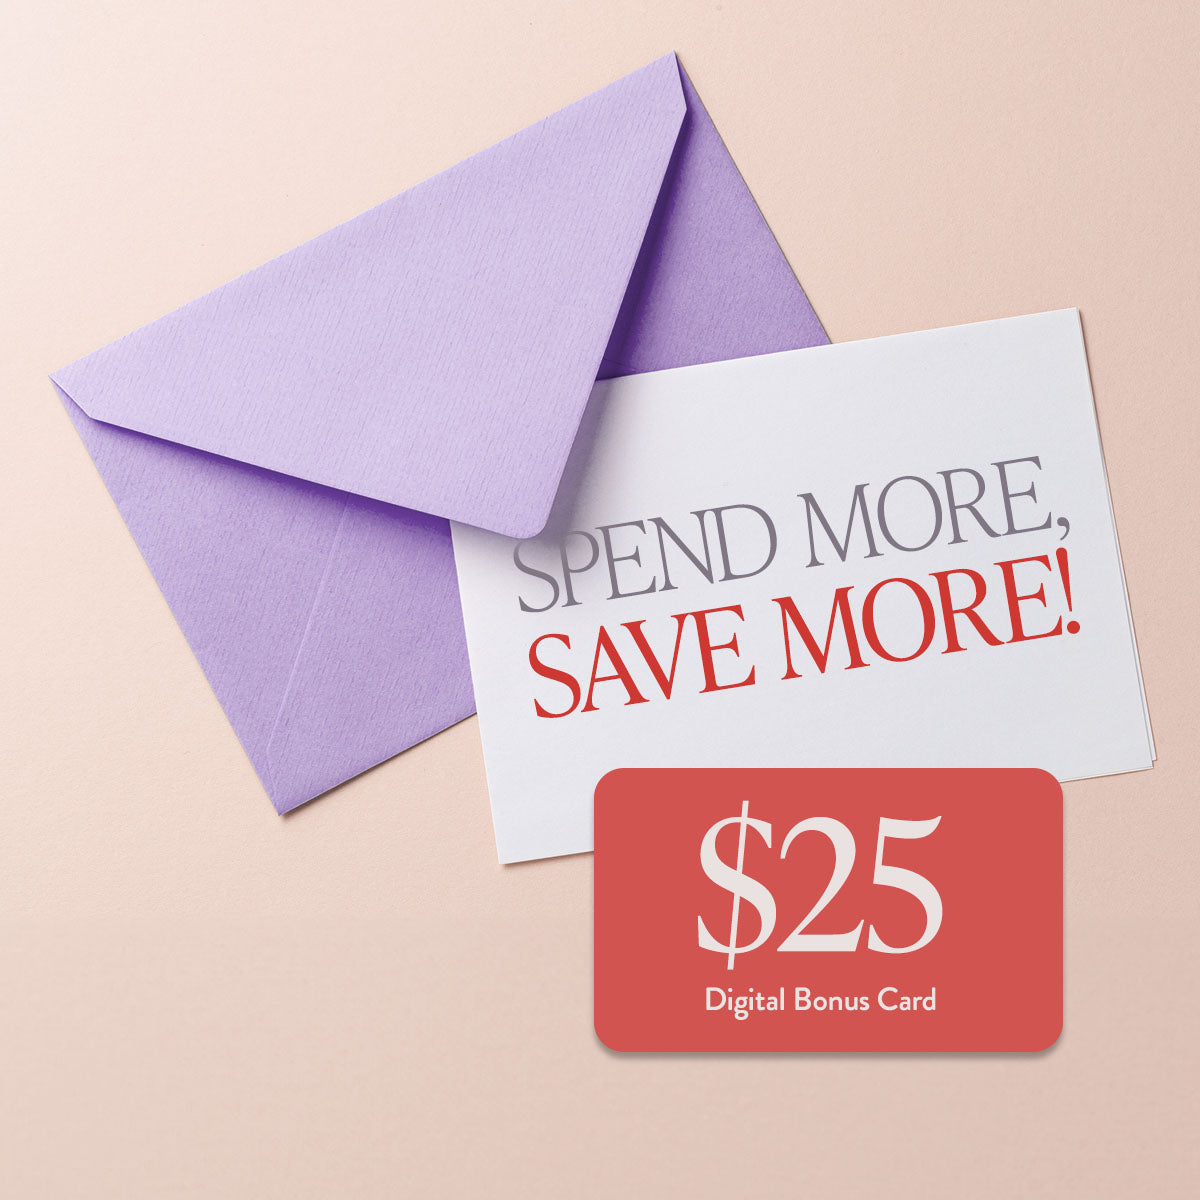 Spend More, Save More! $25 Digital Bonus Card